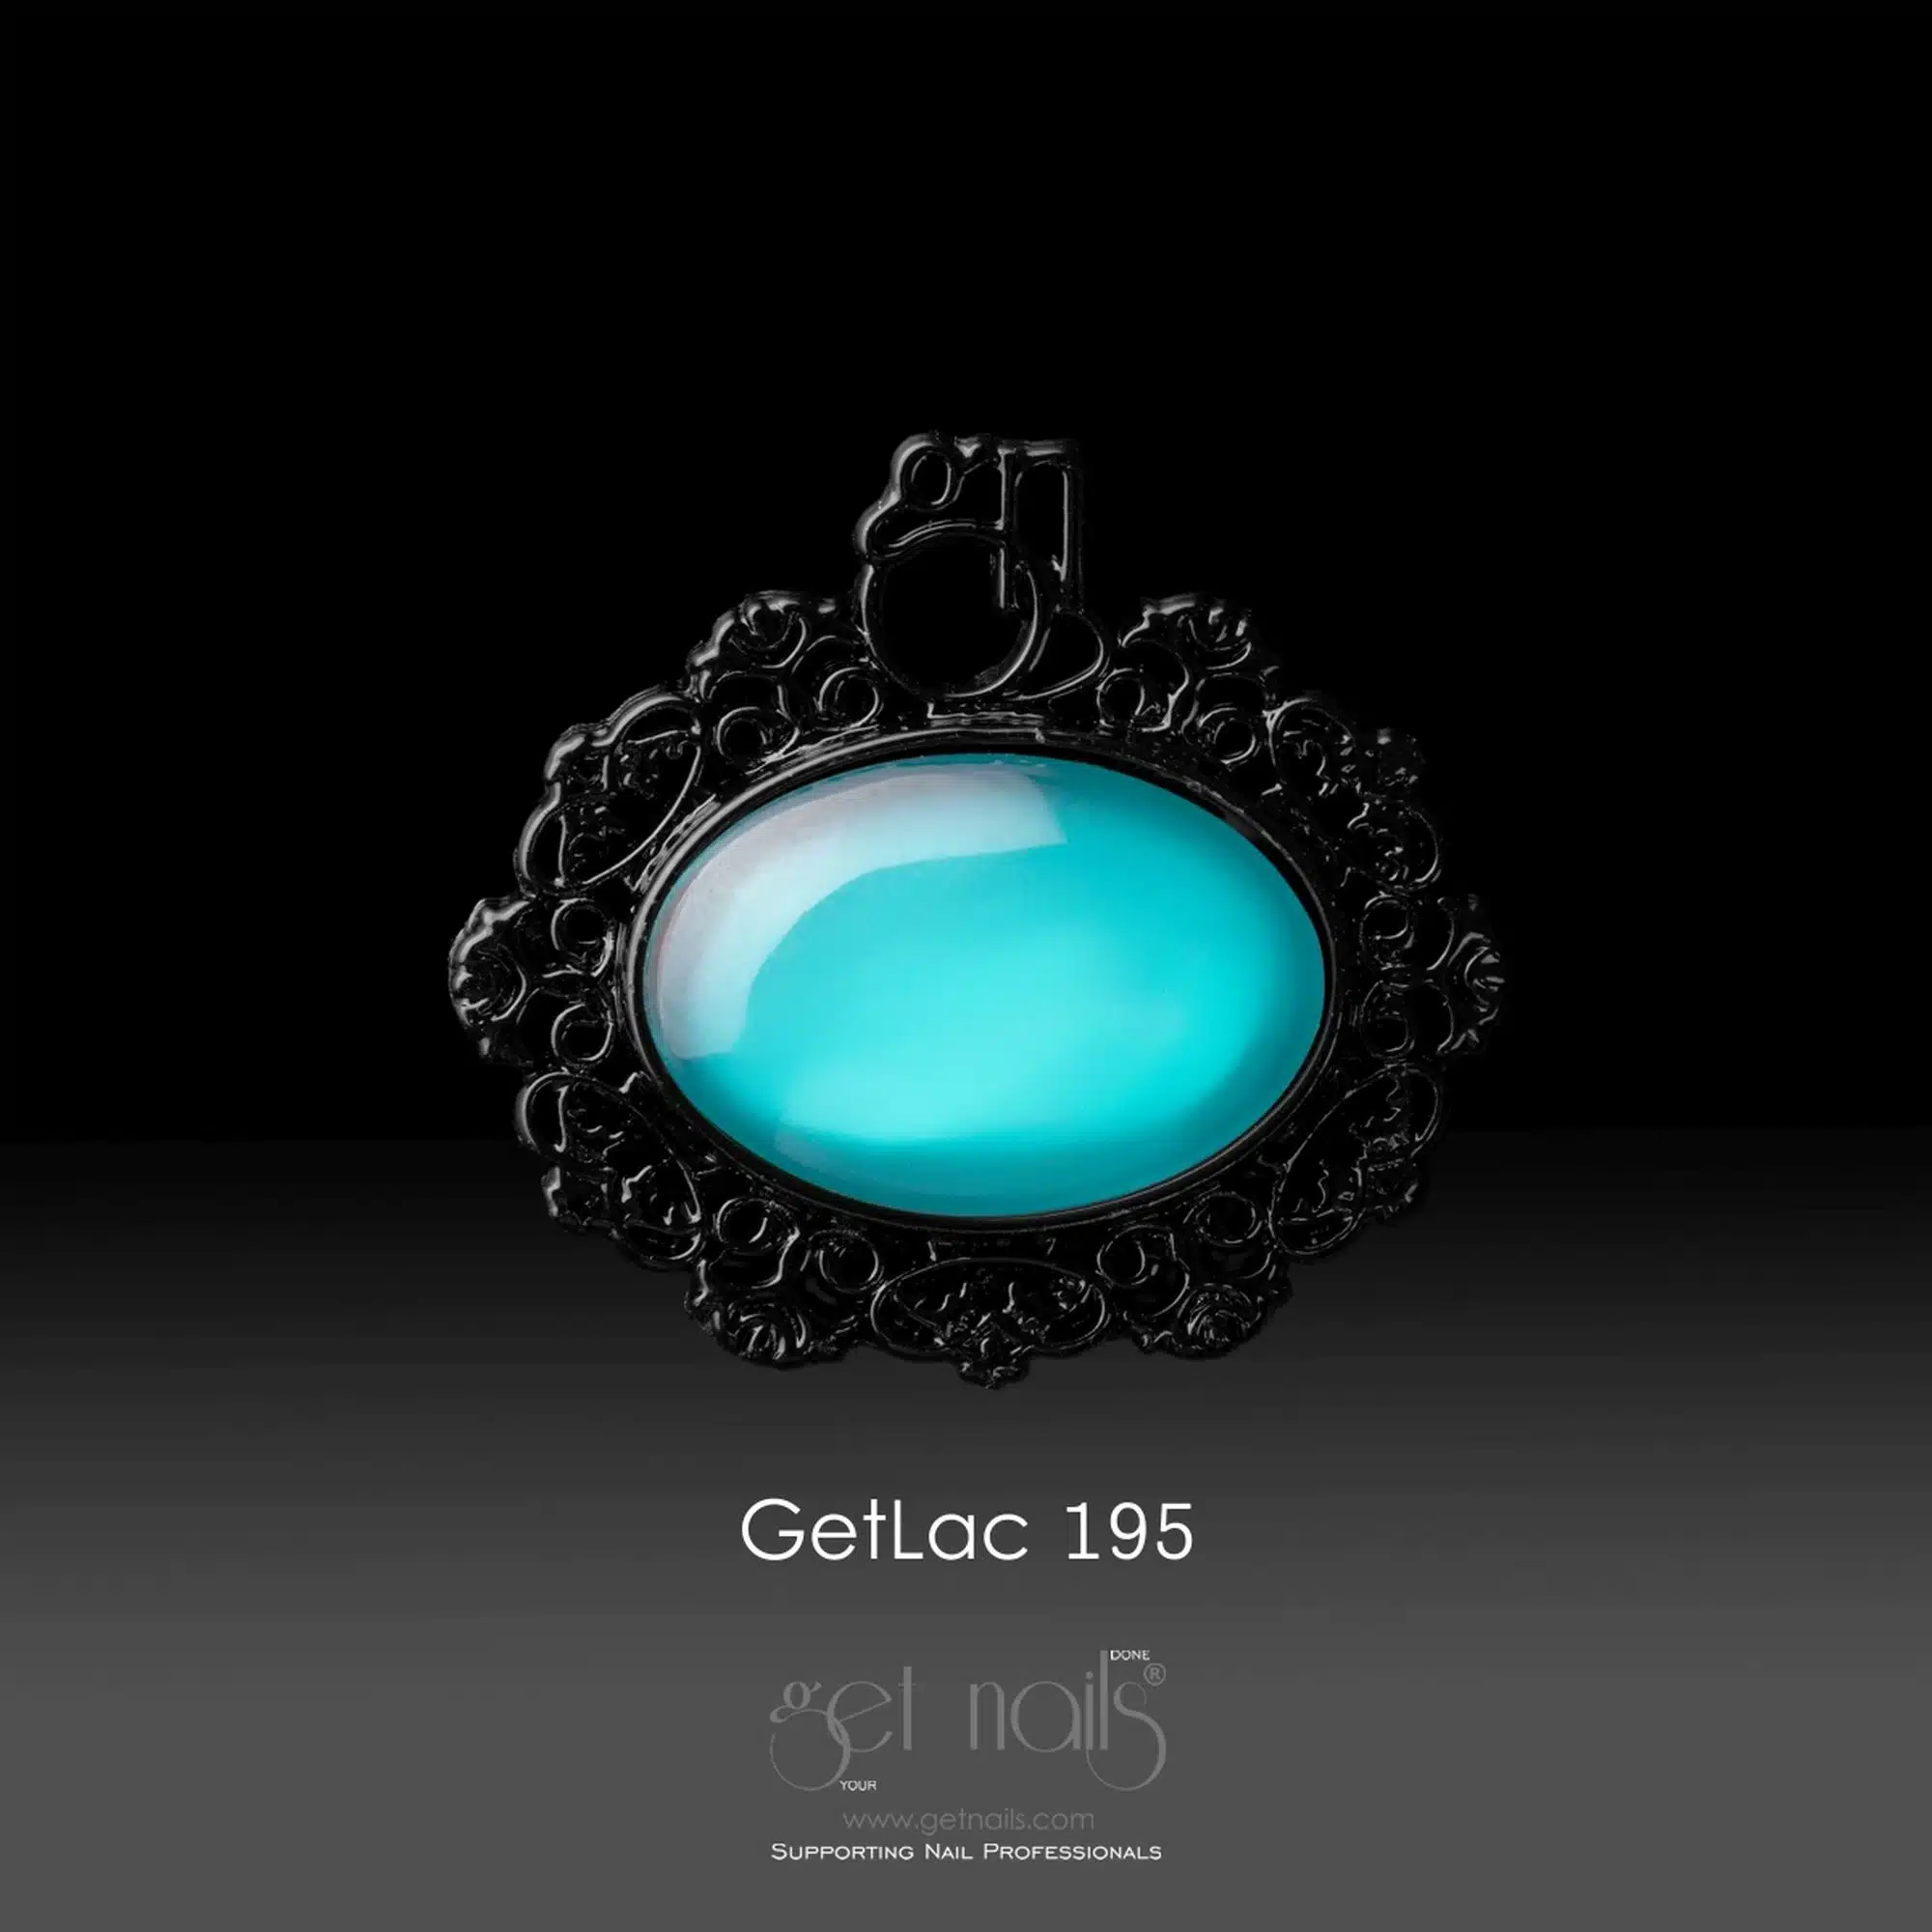 Get Nails Austria - GetLac 195 Blue Curacao 15 g